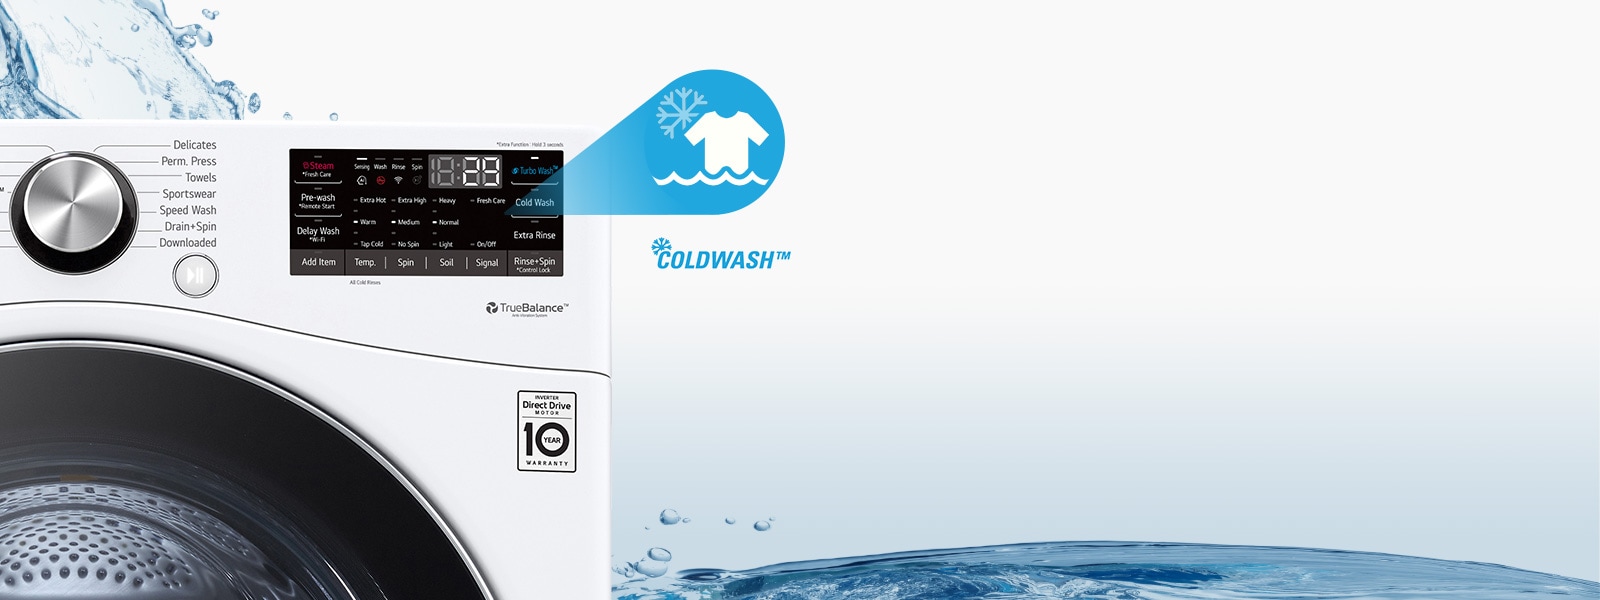 Washer showcasing ColdWash™ technology feature